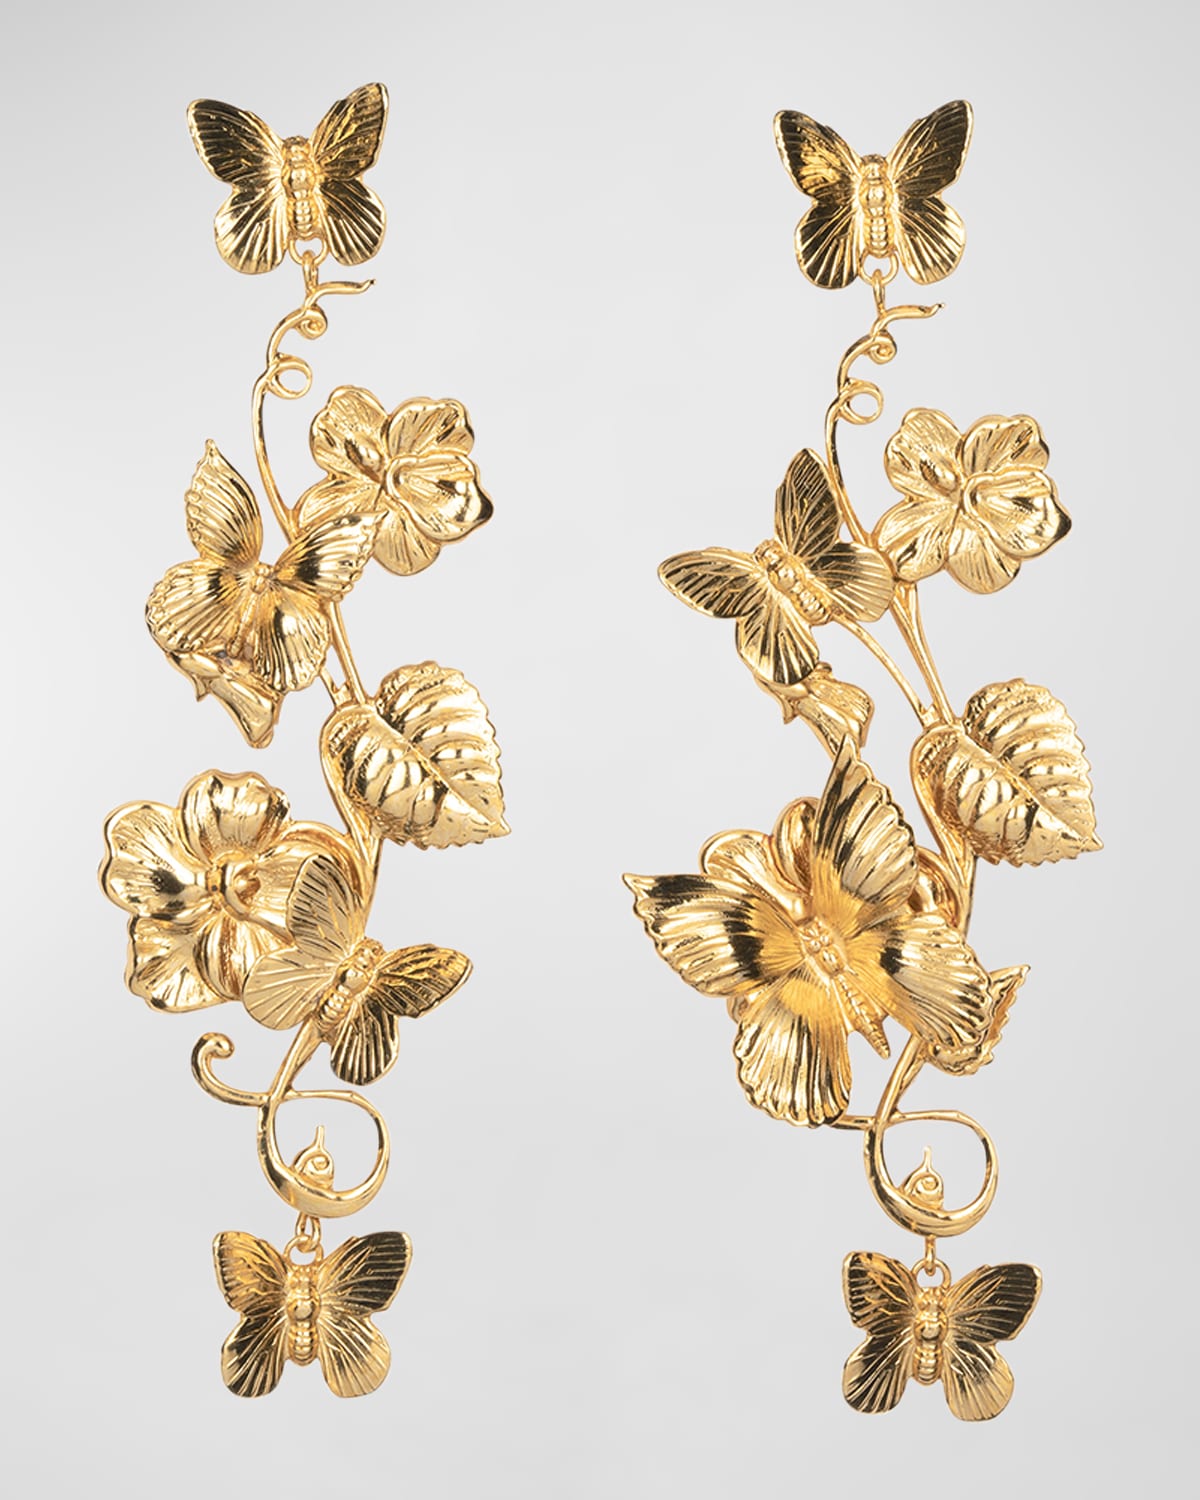 Jennifer Behr Tatiana Crystal and Glass Pearl Drop Earrings | Neiman Marcus